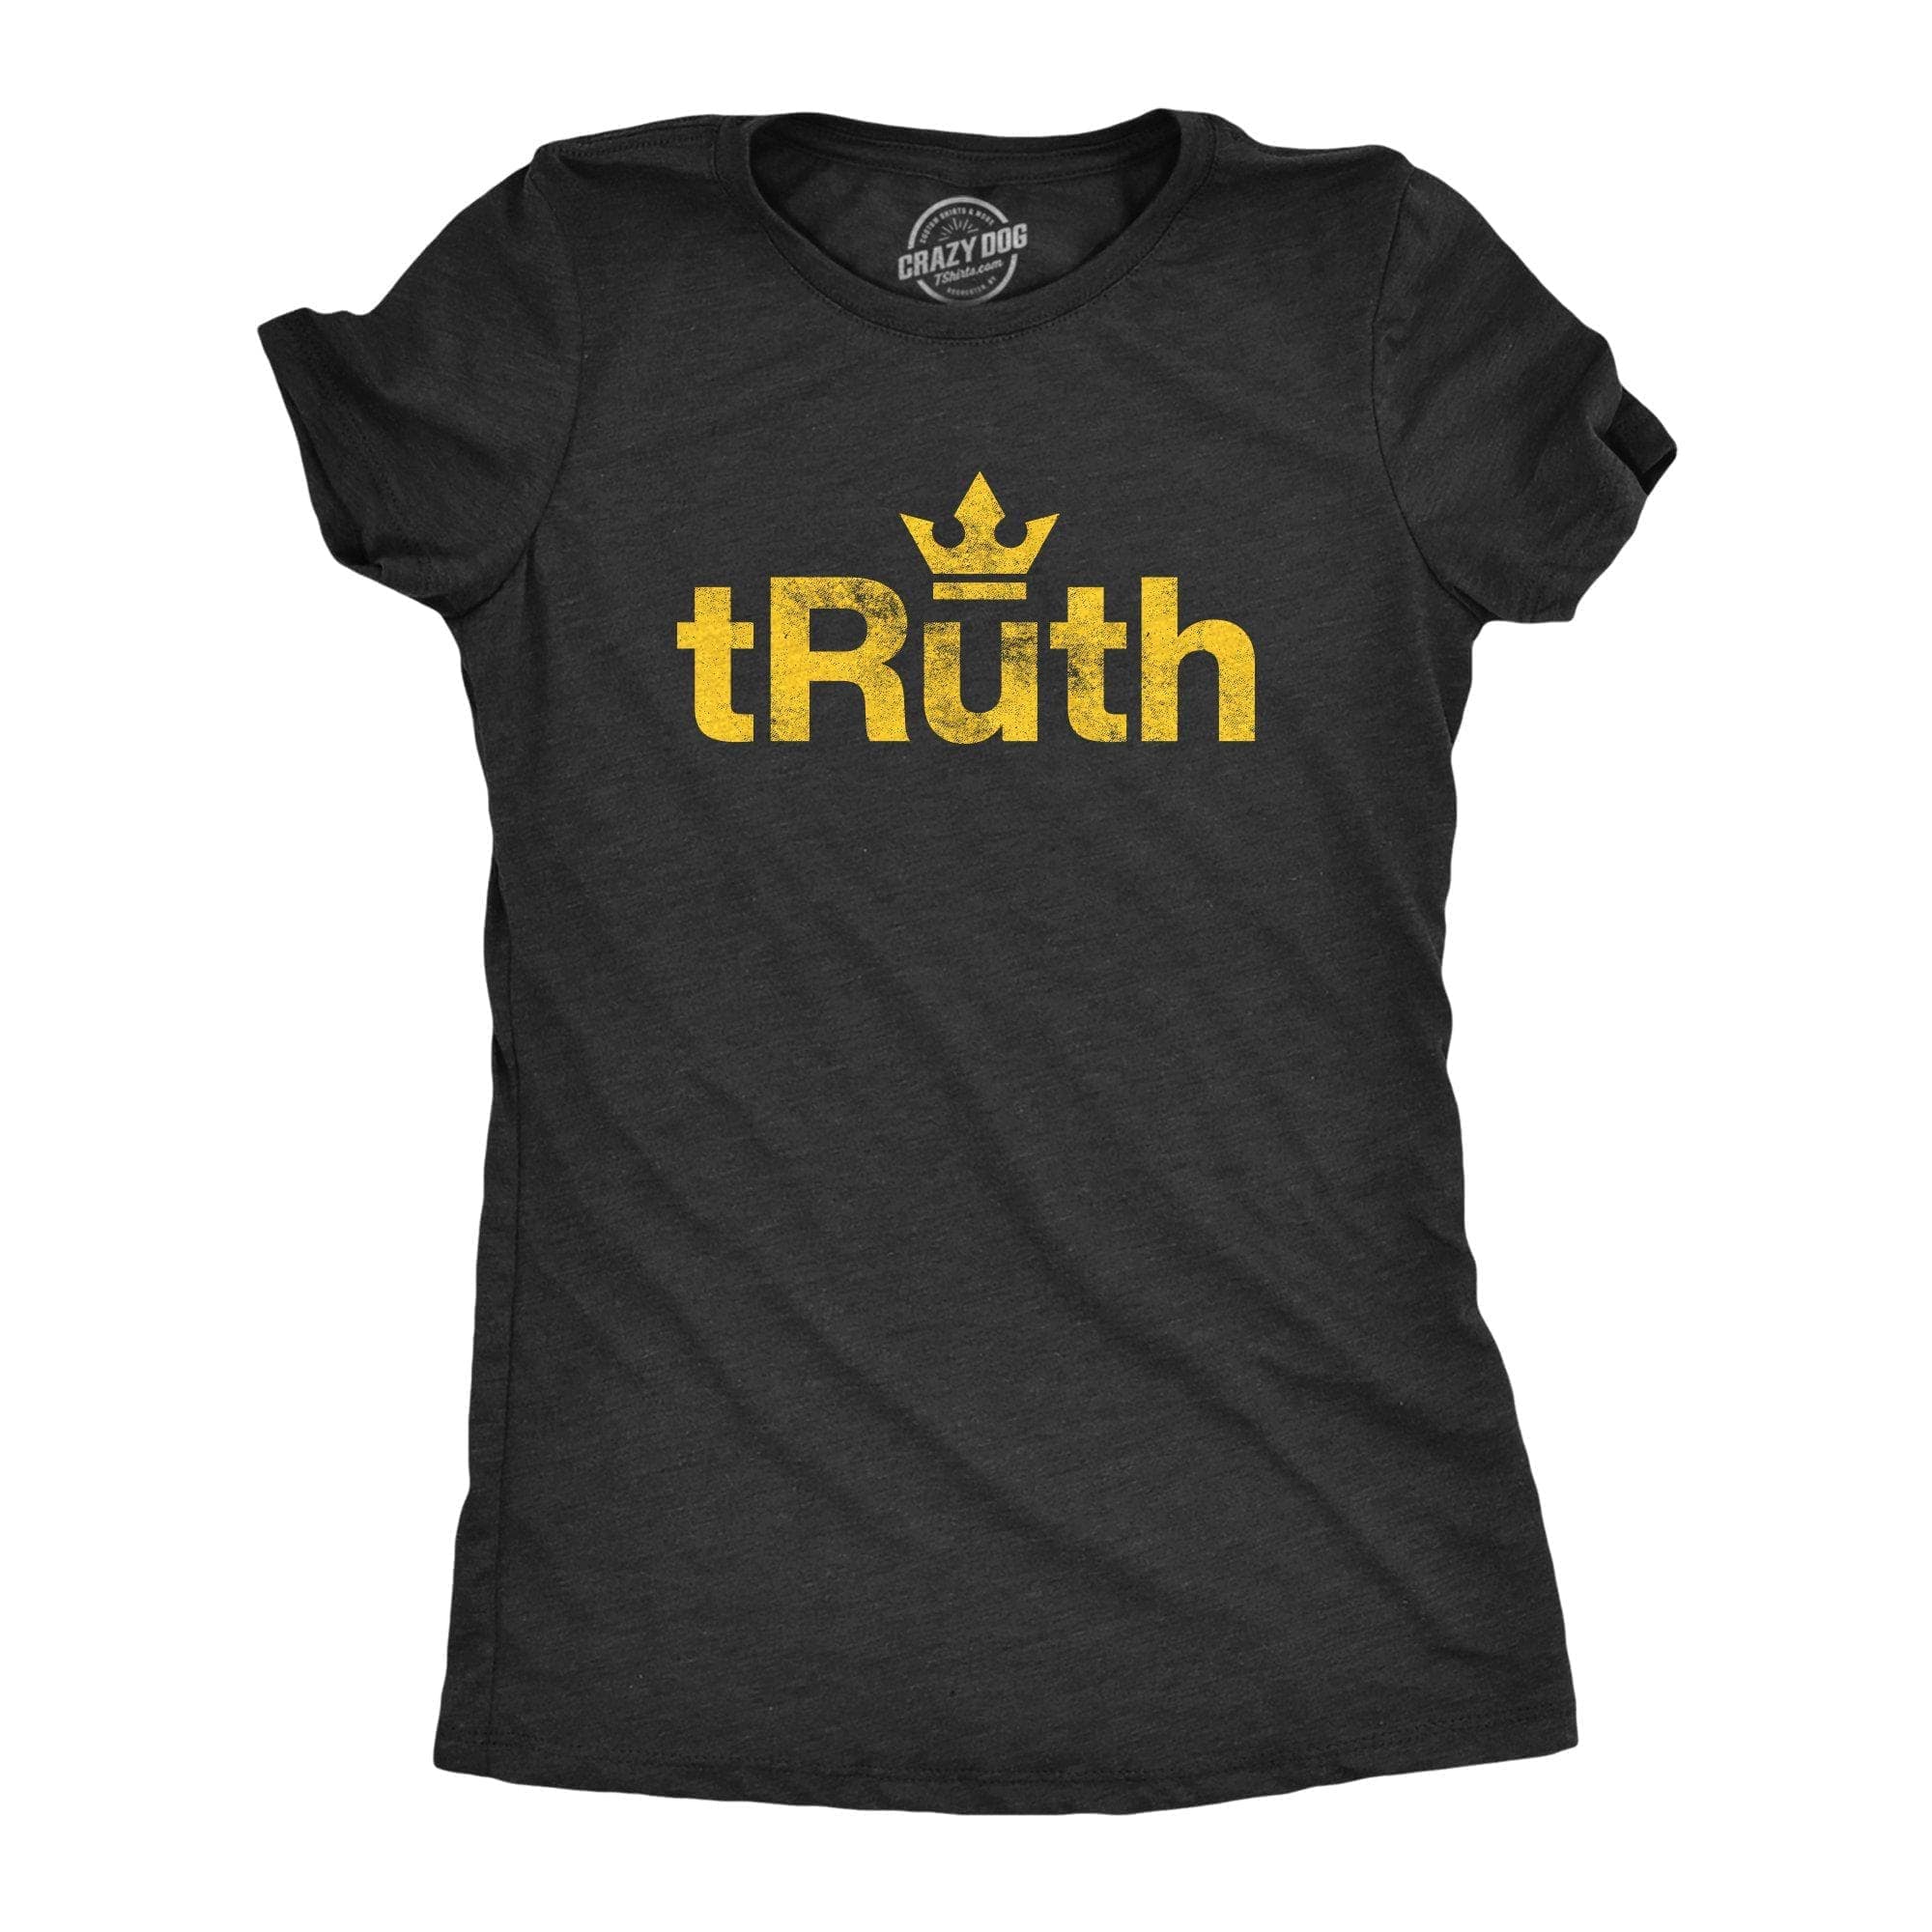 tRuth Women's Tshirt - Crazy Dog T-Shirts